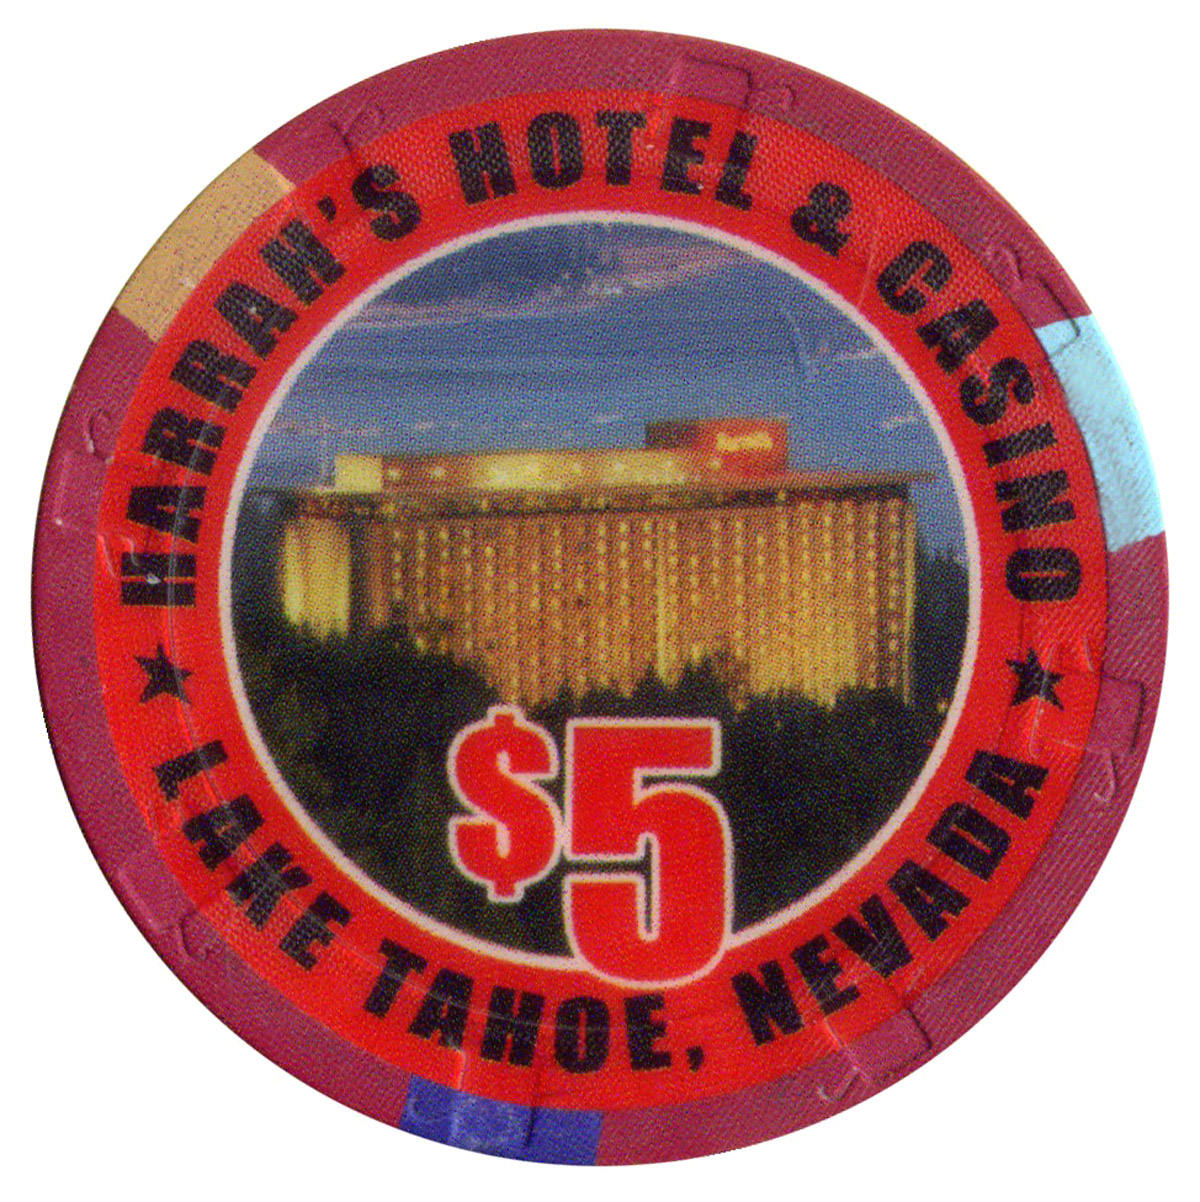 who owns harrahs lake tahoe casino